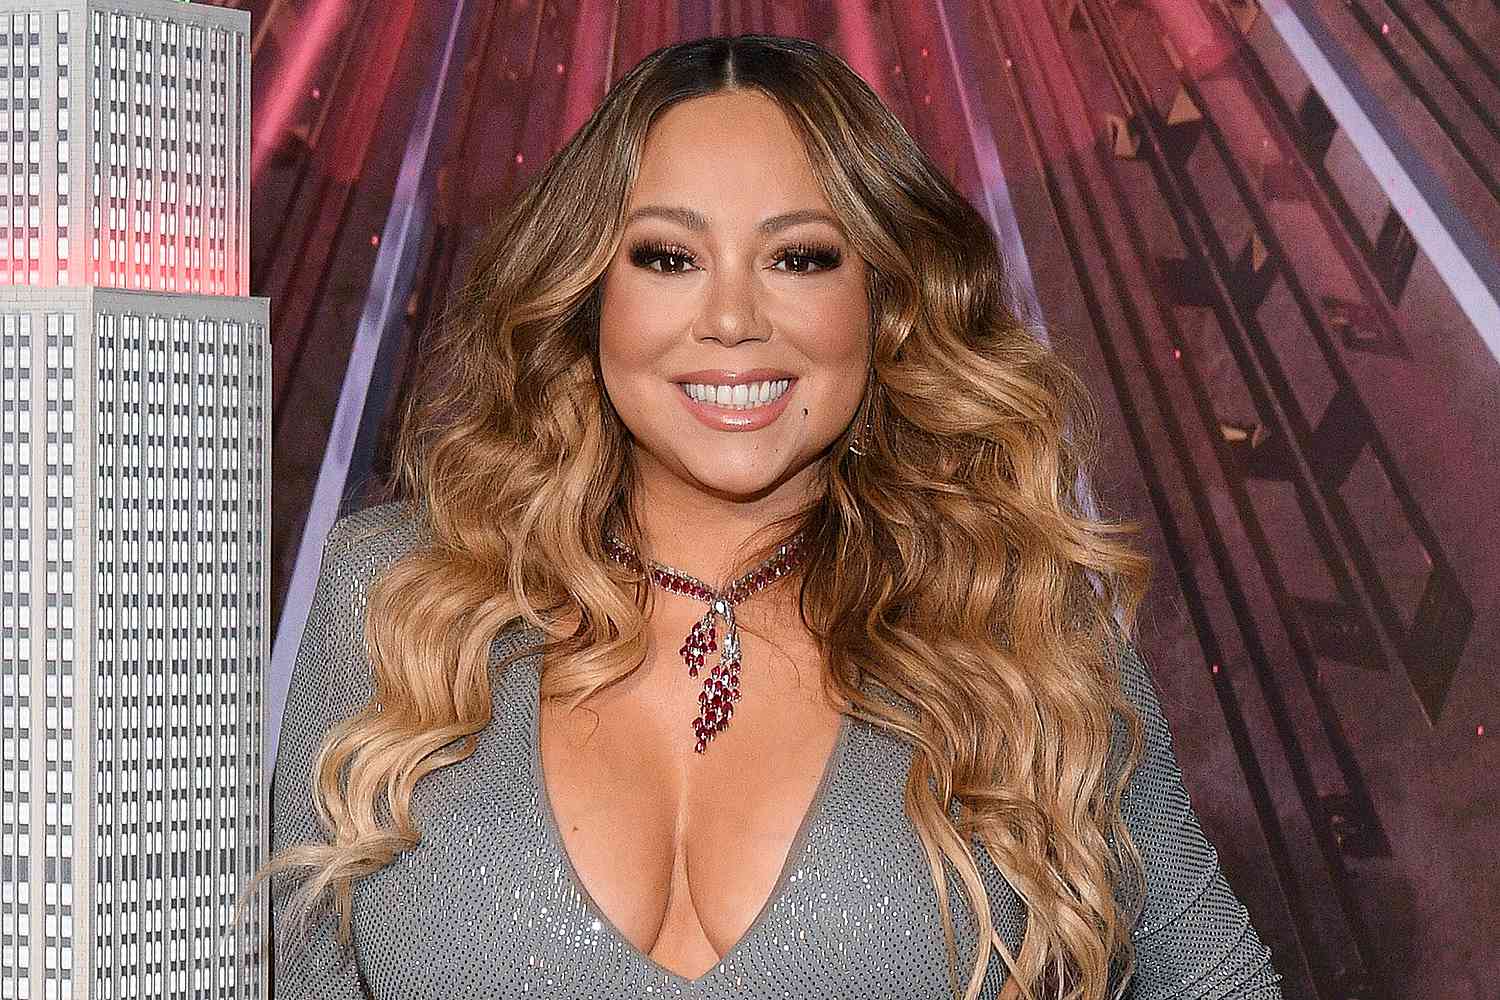 Mariah Carey wearing a gray dress